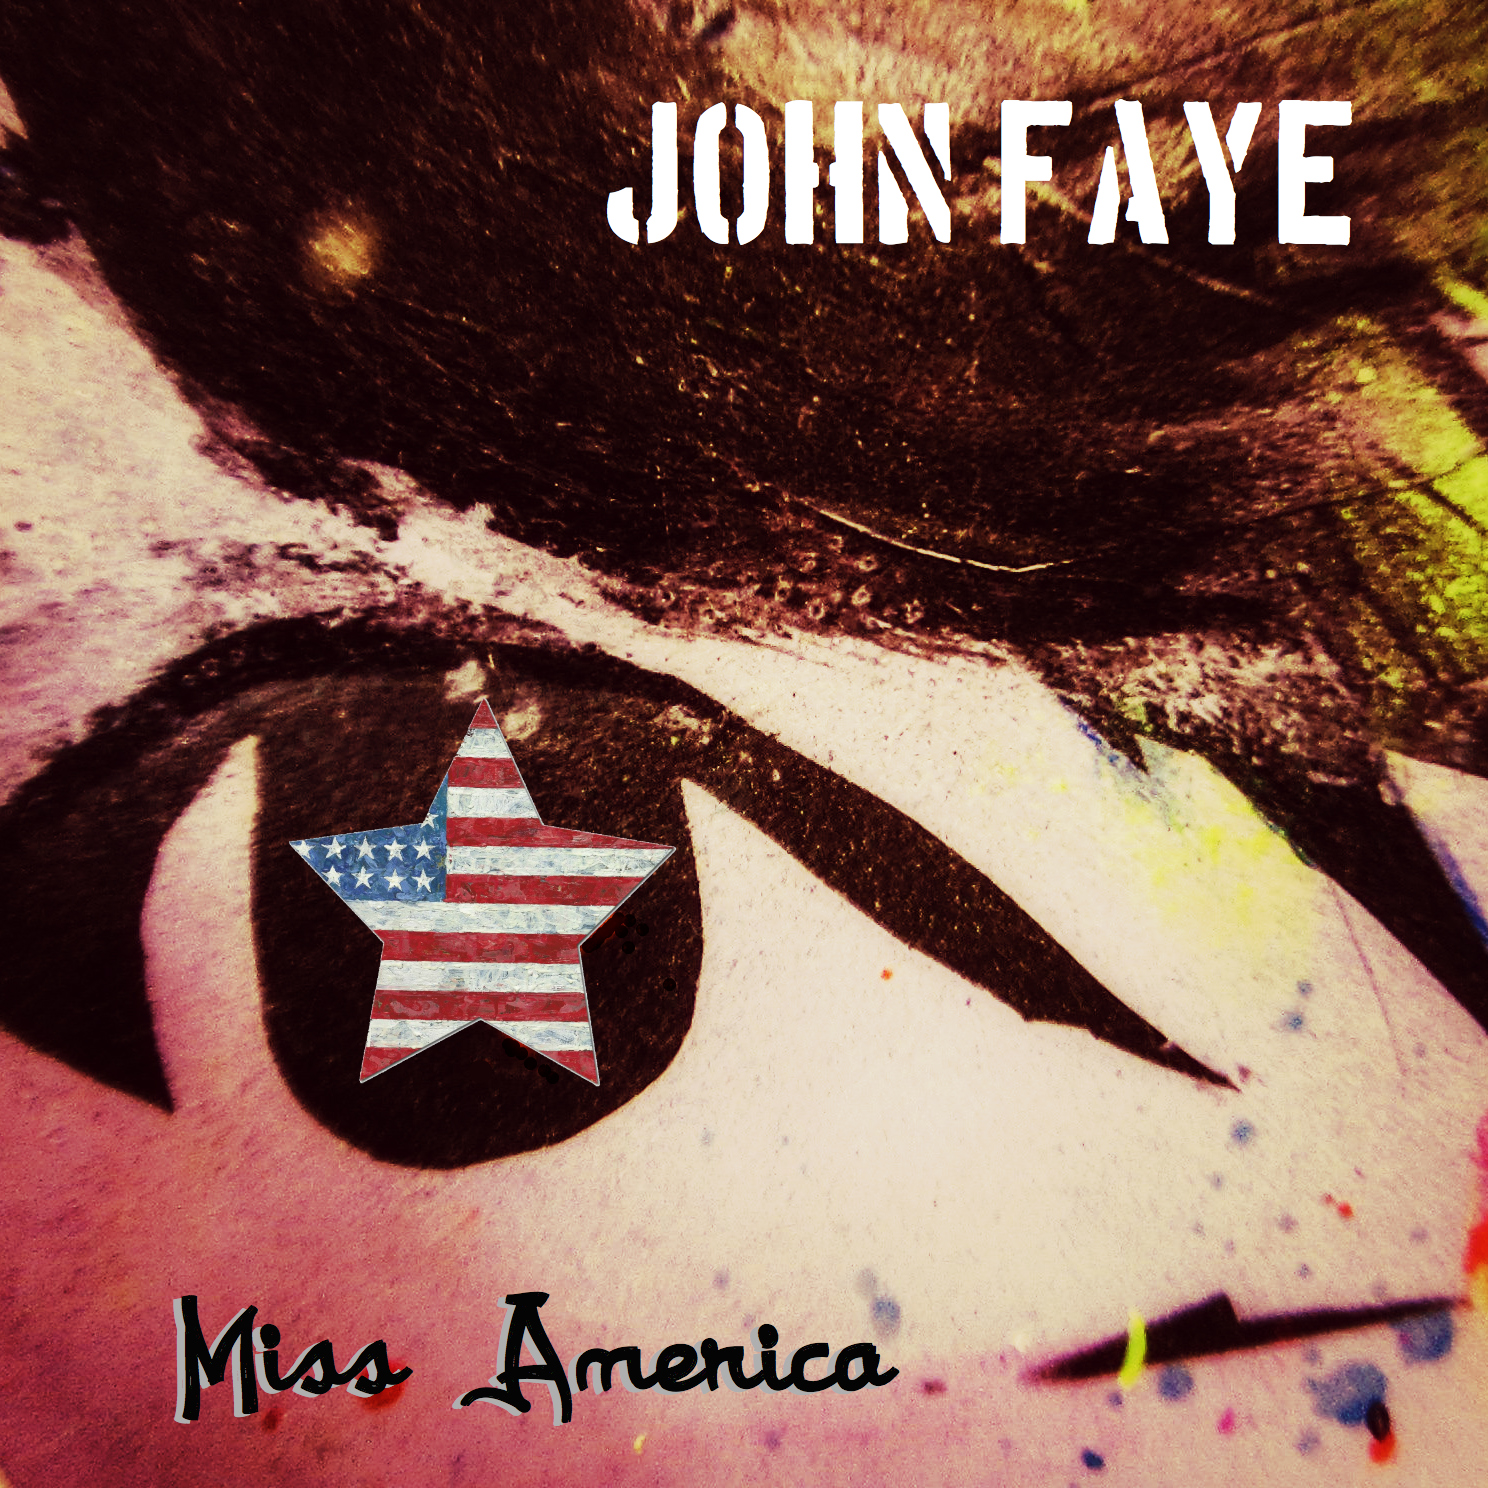 John Faye “Miss America”